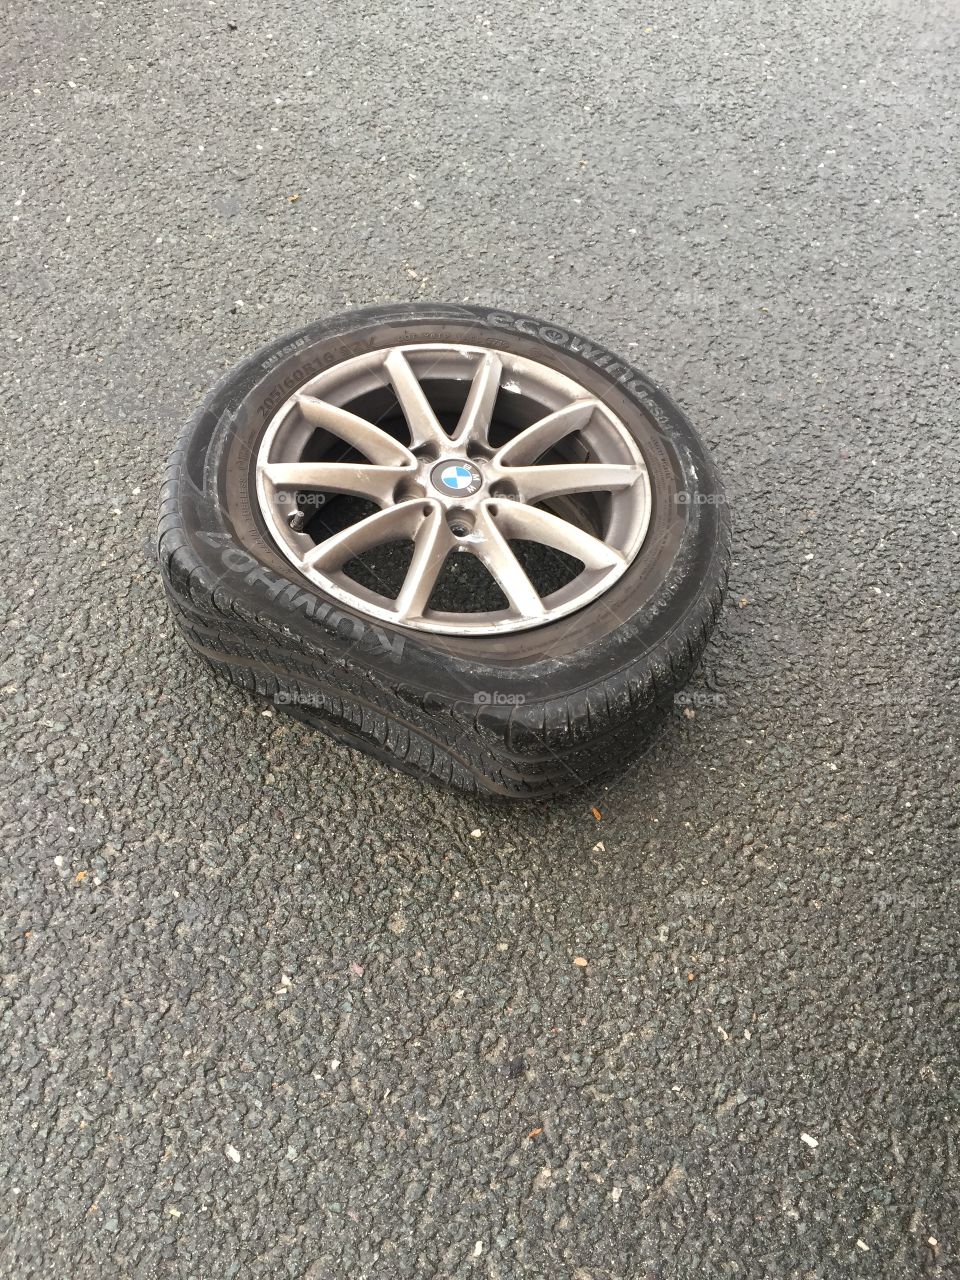 Flat tire BMW